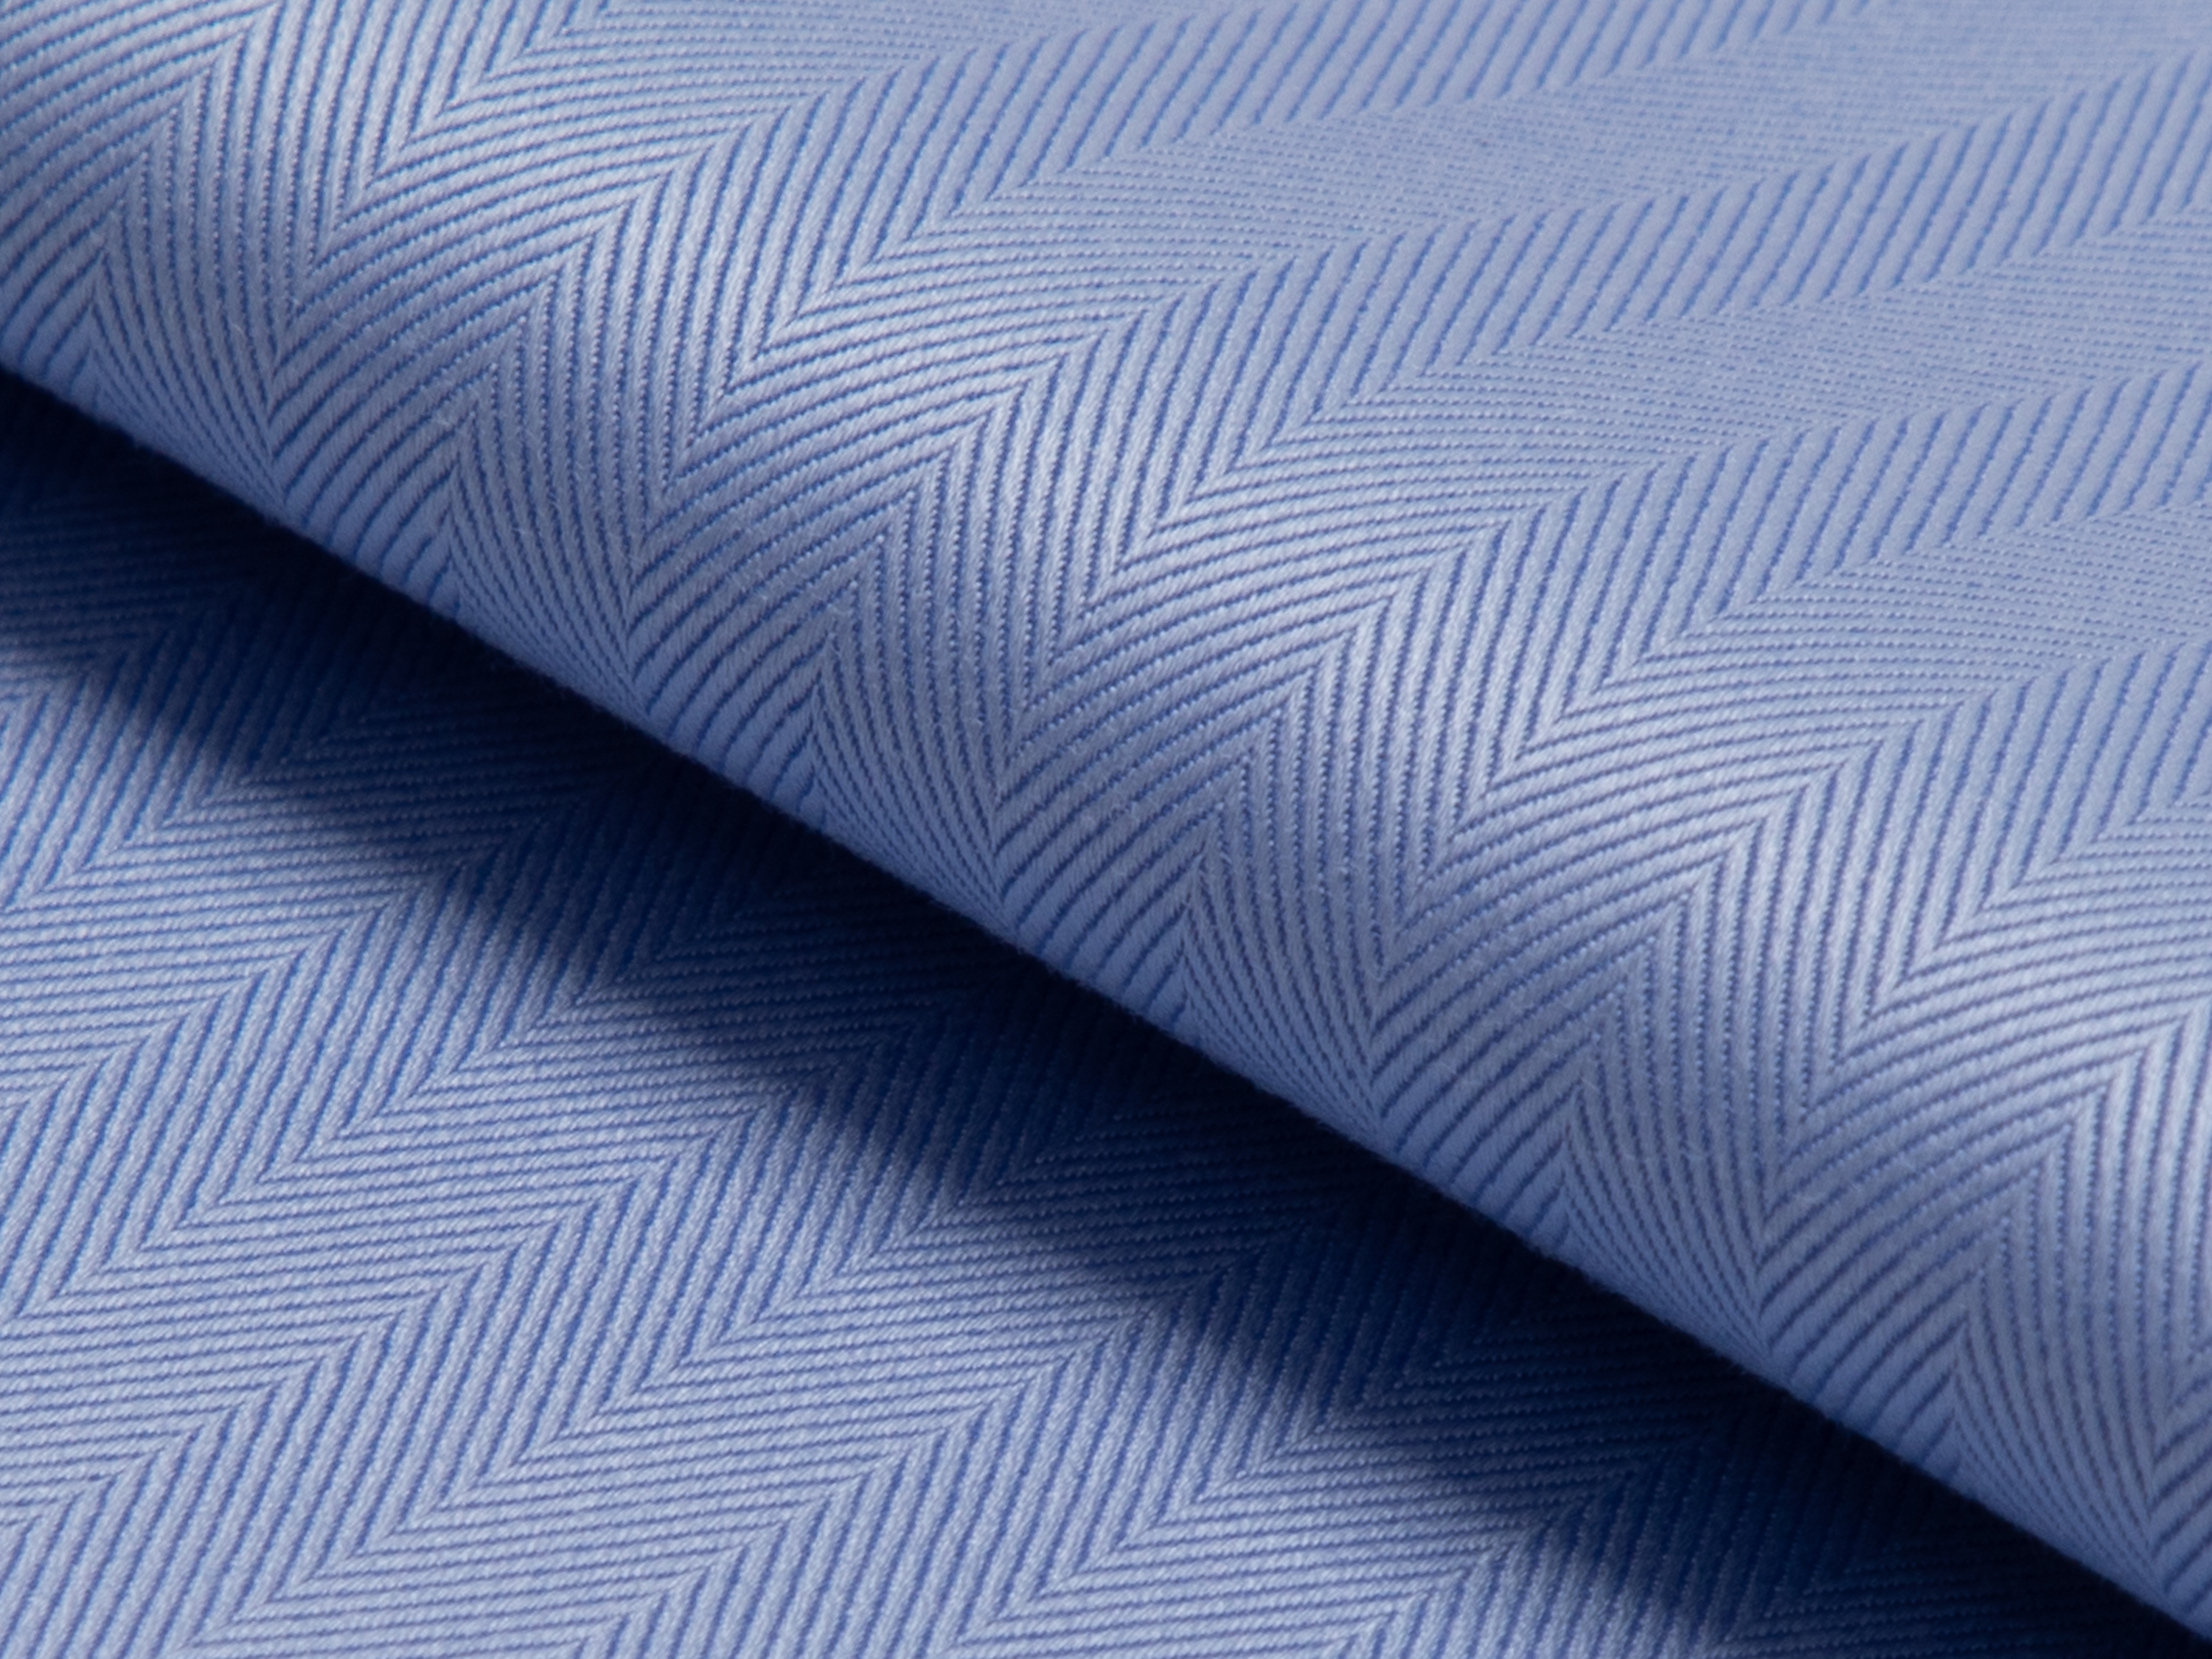 Buy tailor made shirts online - MAYFAIR - Herringbone Blue